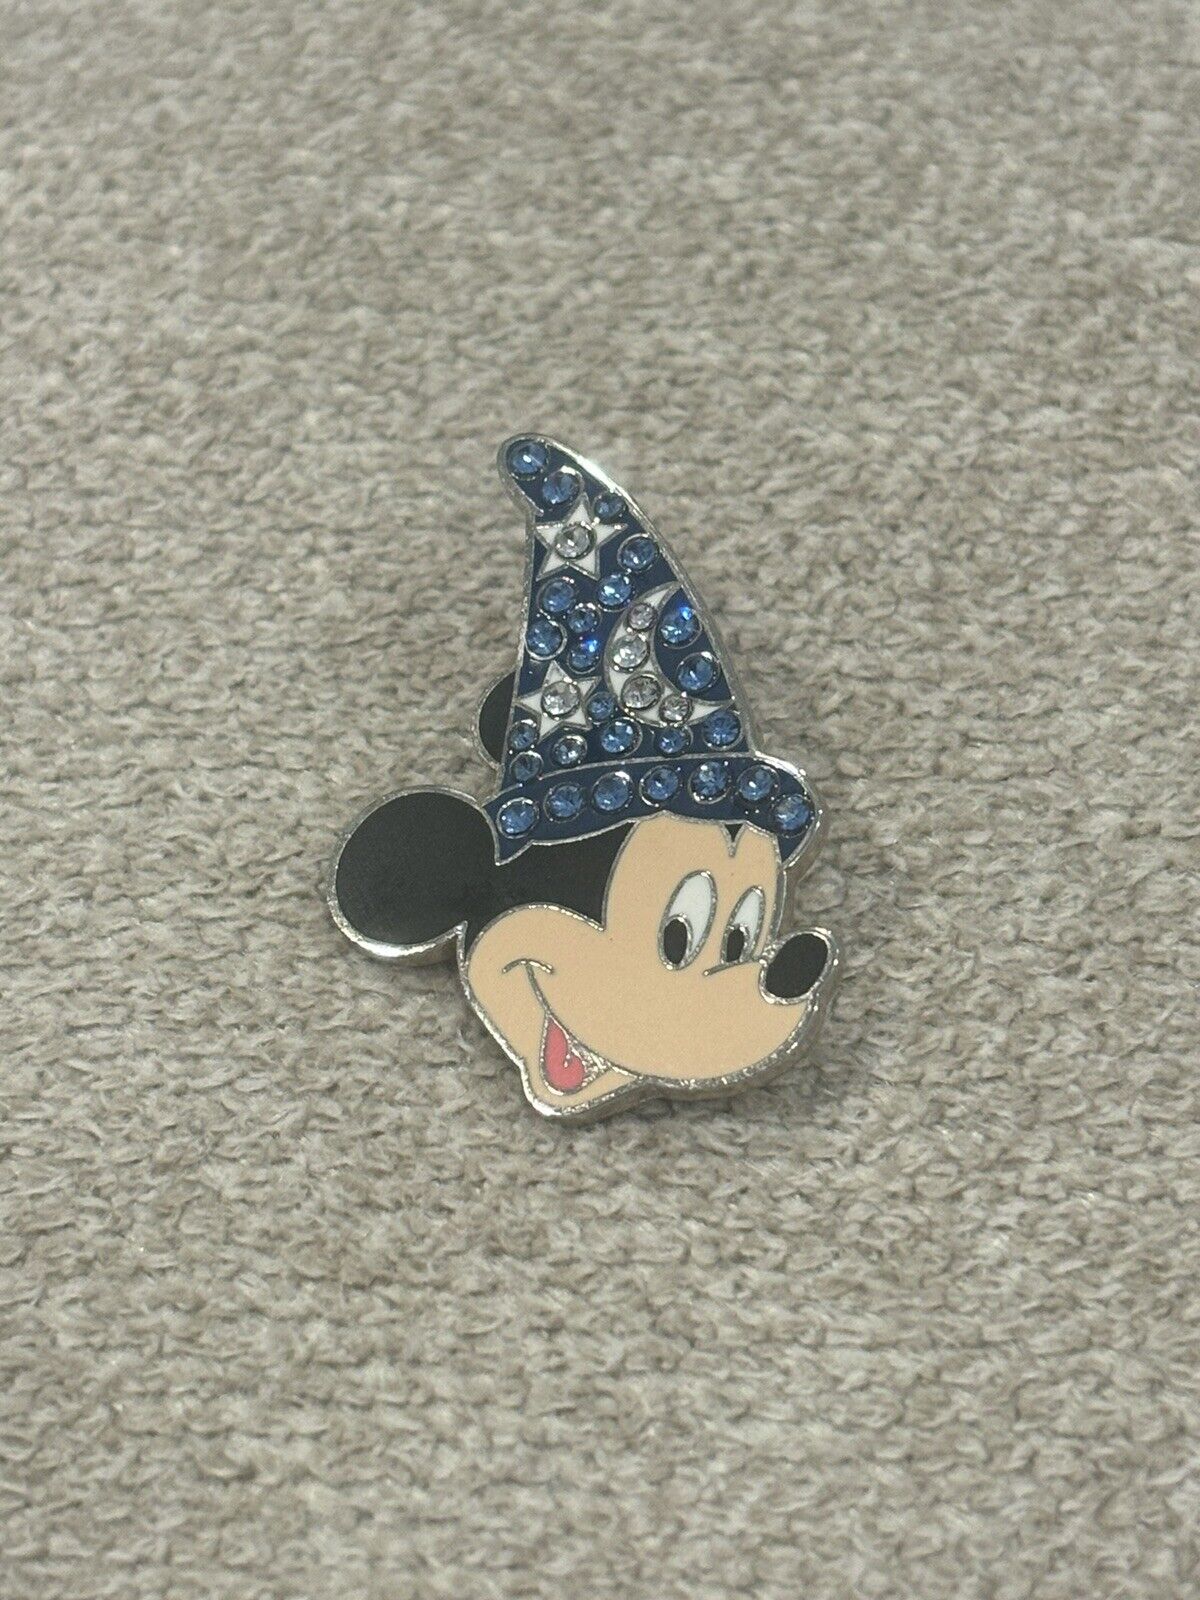 Disney Mickey Mouse Fantasia Pin. 2008